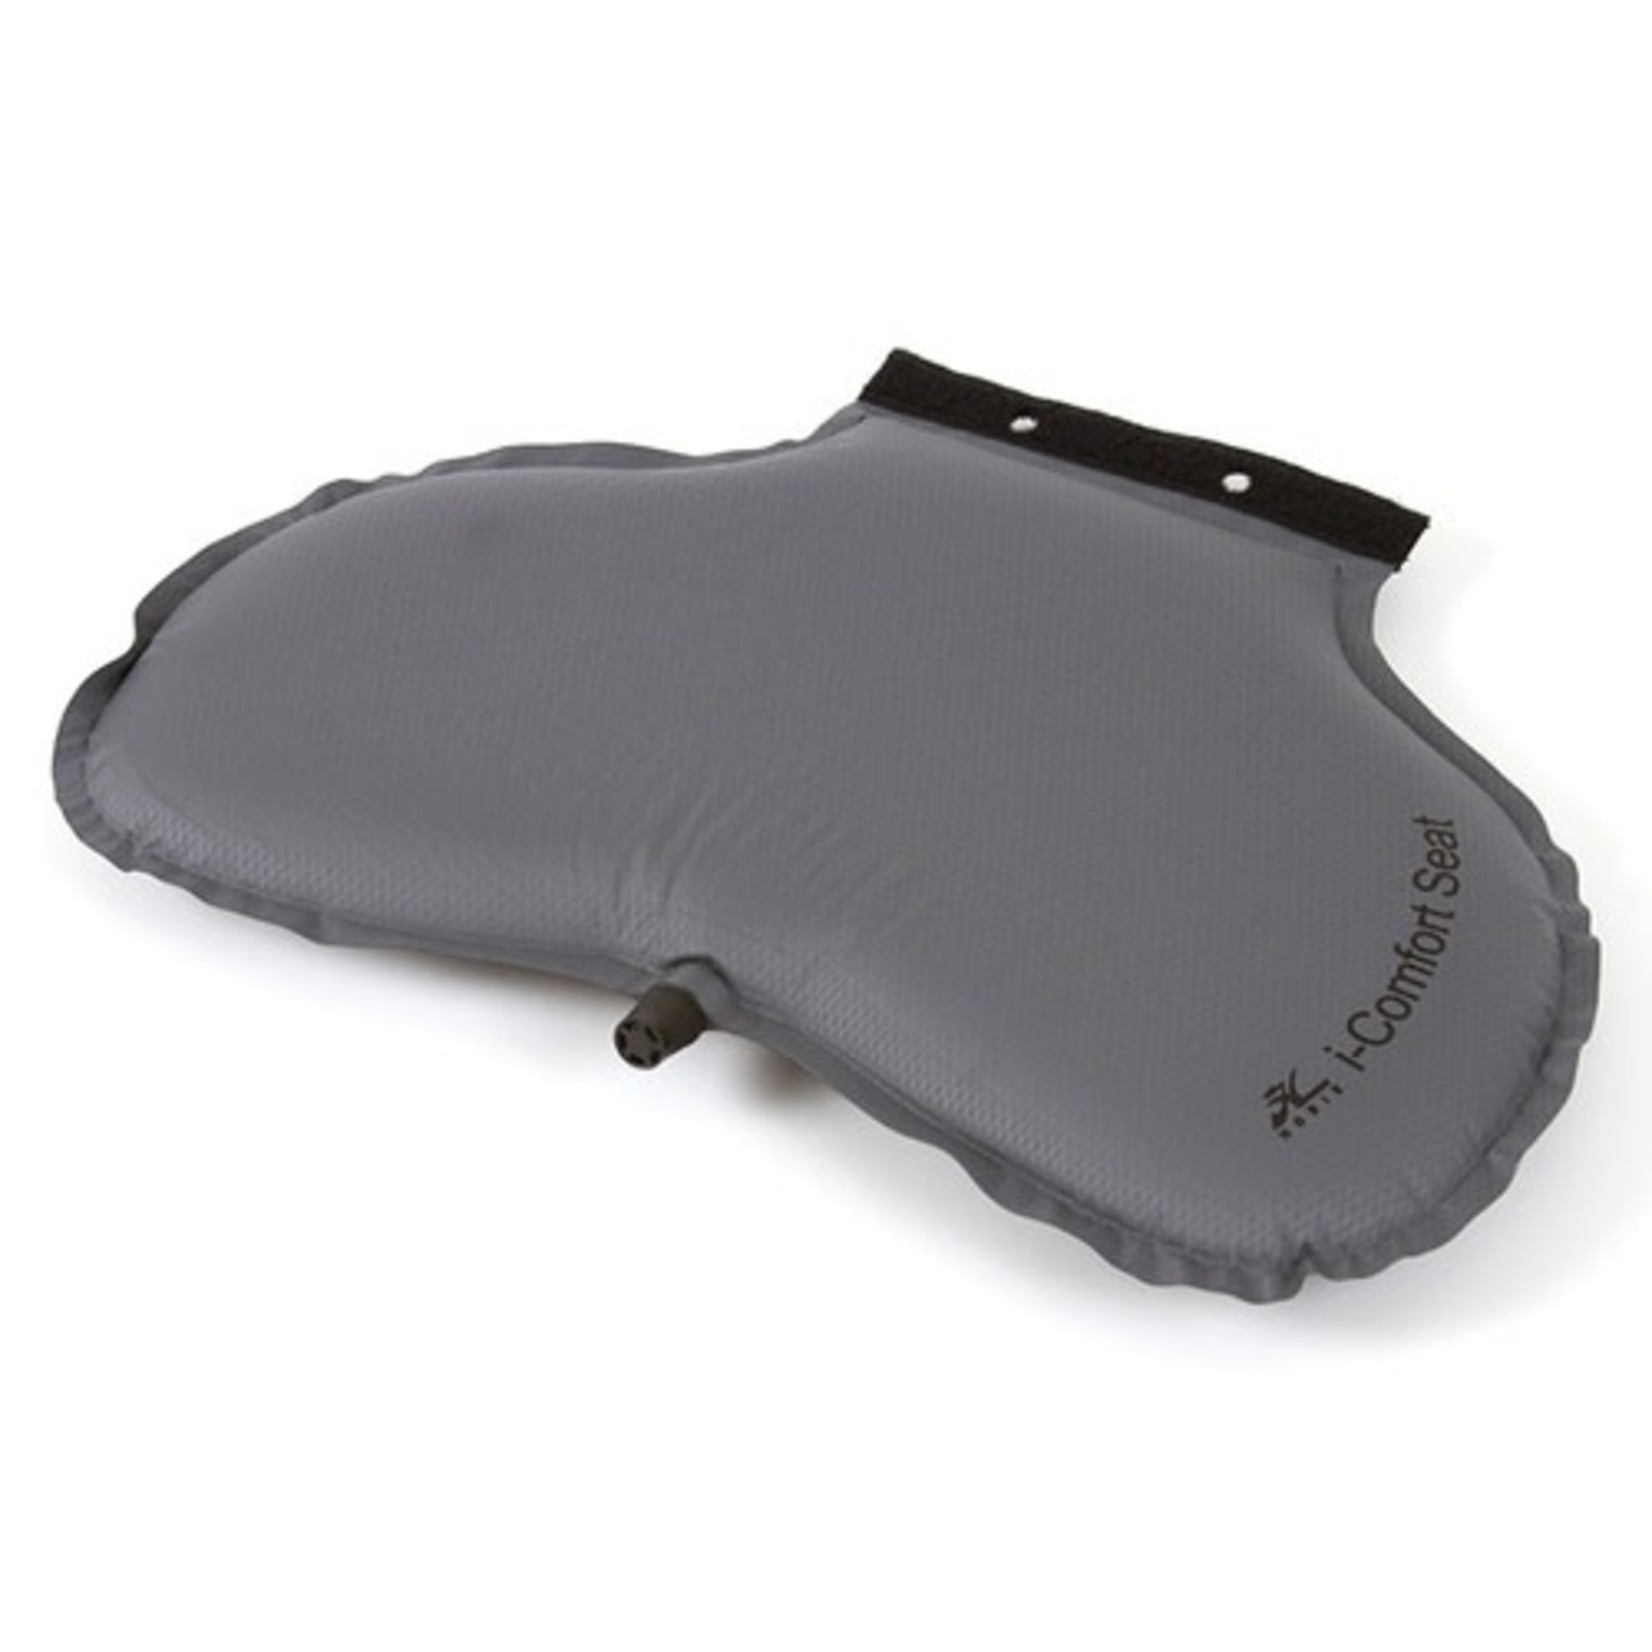 Hobie Hobie Mirage Seat Pad - Inflatable